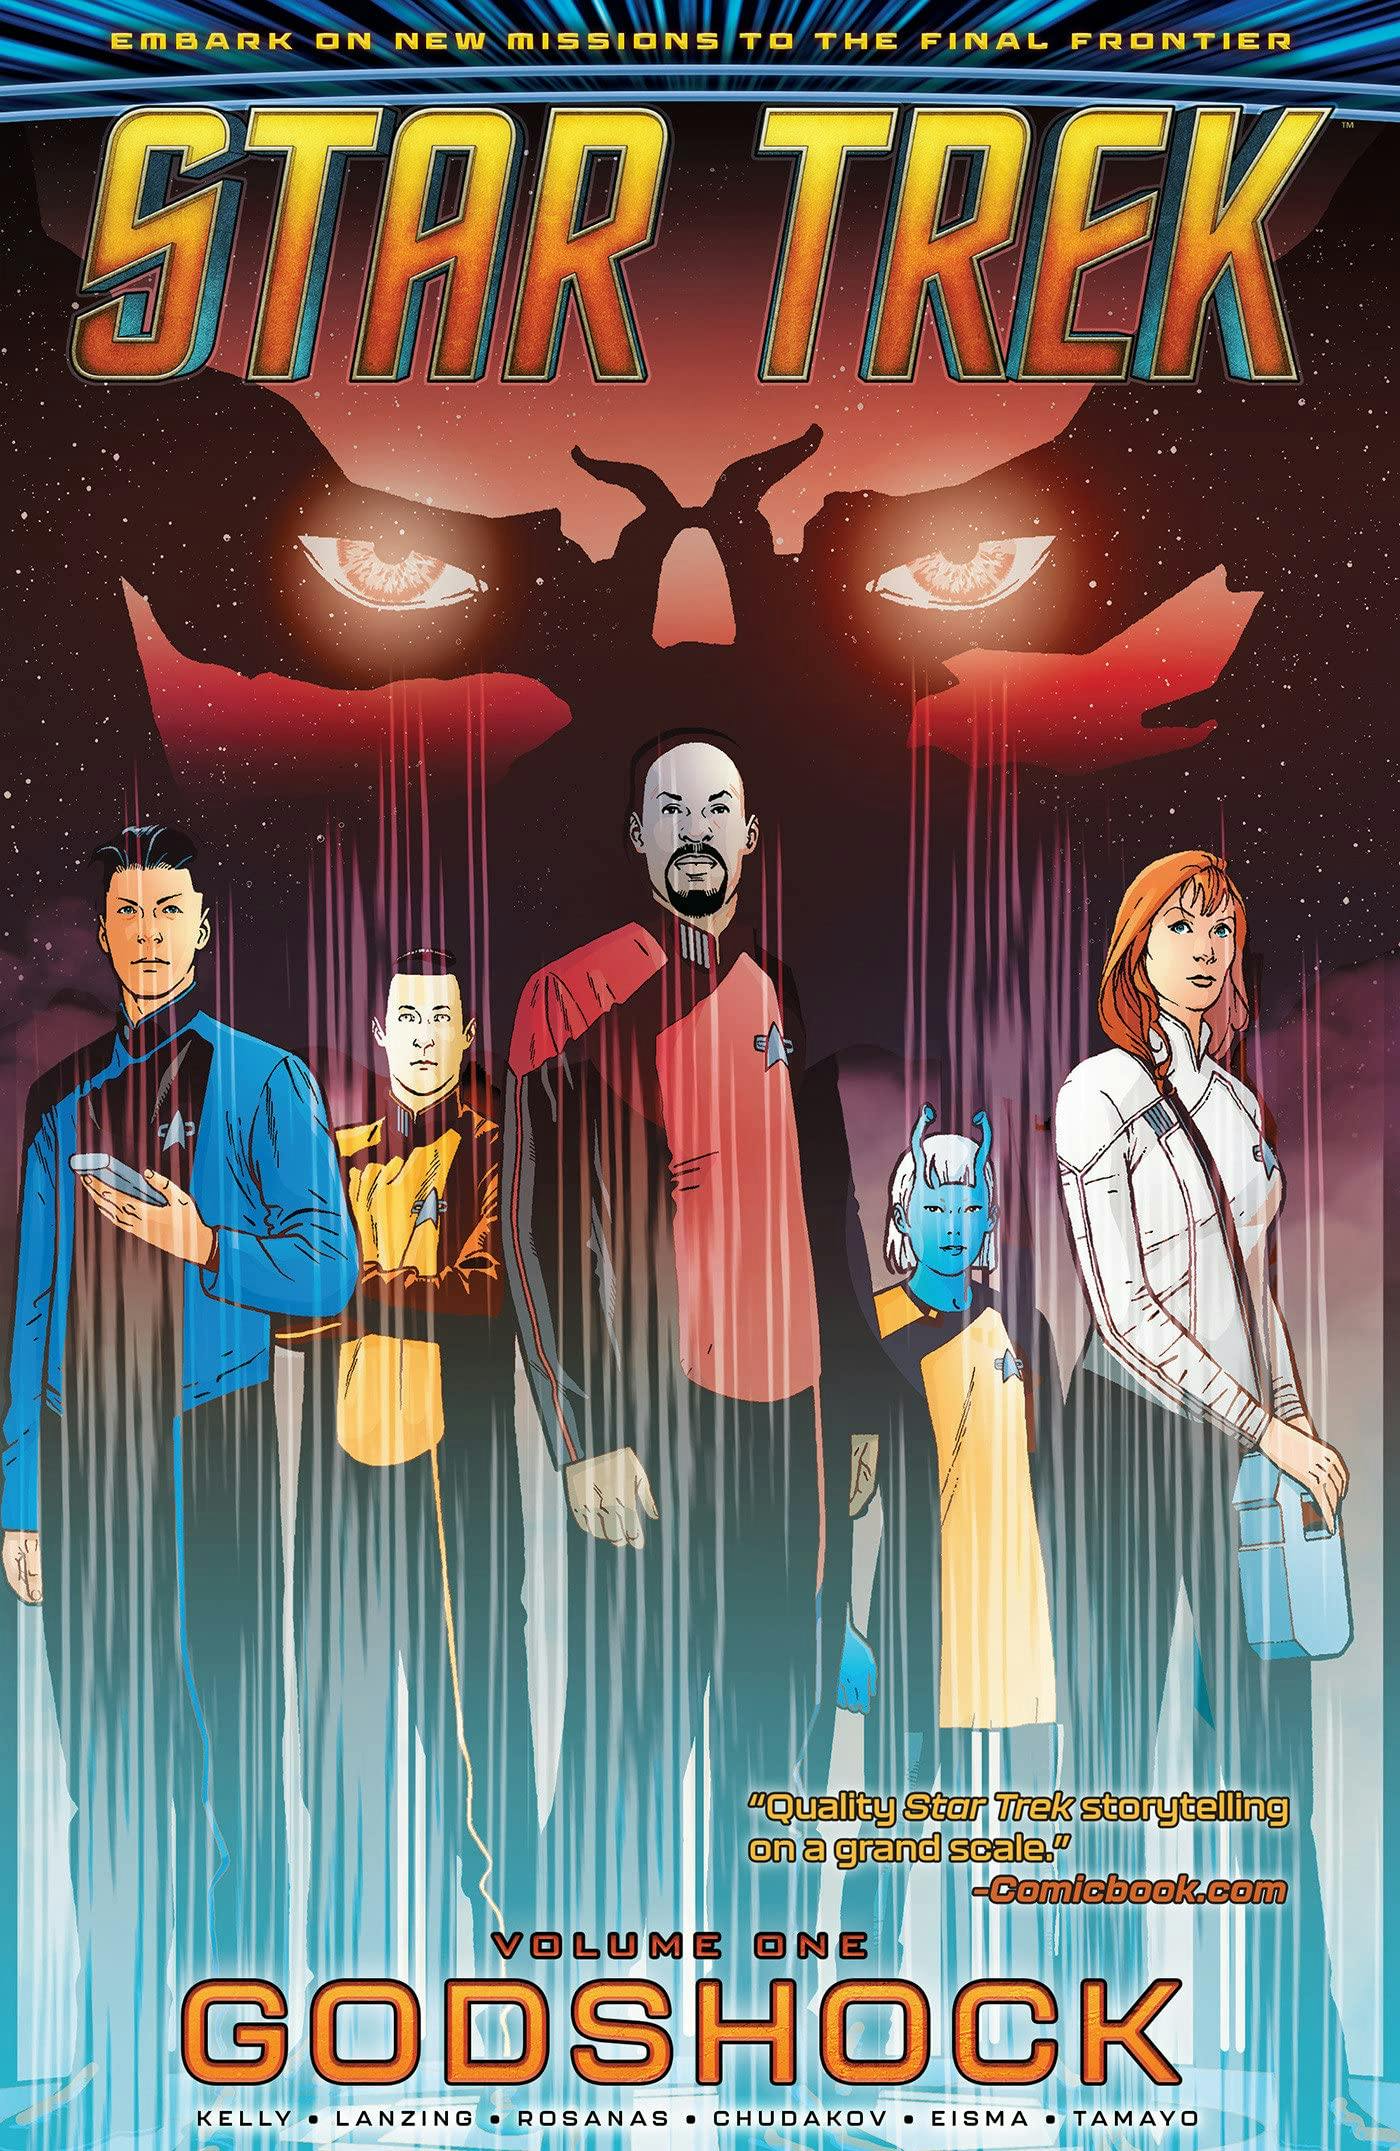 STAR TREK Vol. 1: Godshock cover art by Ramon Rosanas